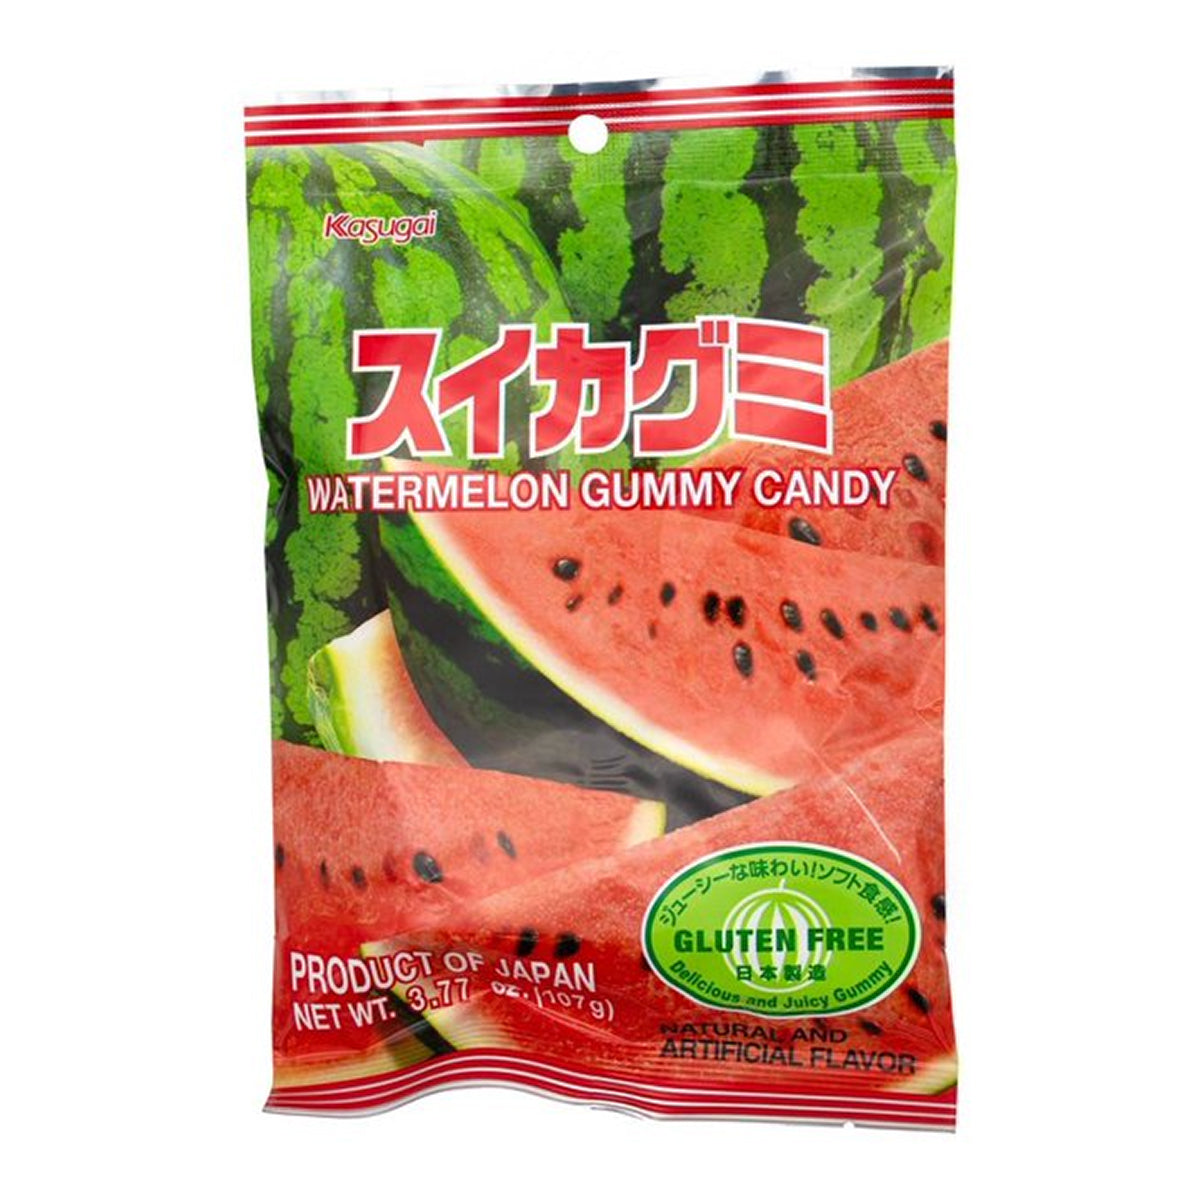 kasugai watermelon gummy candy - 107g